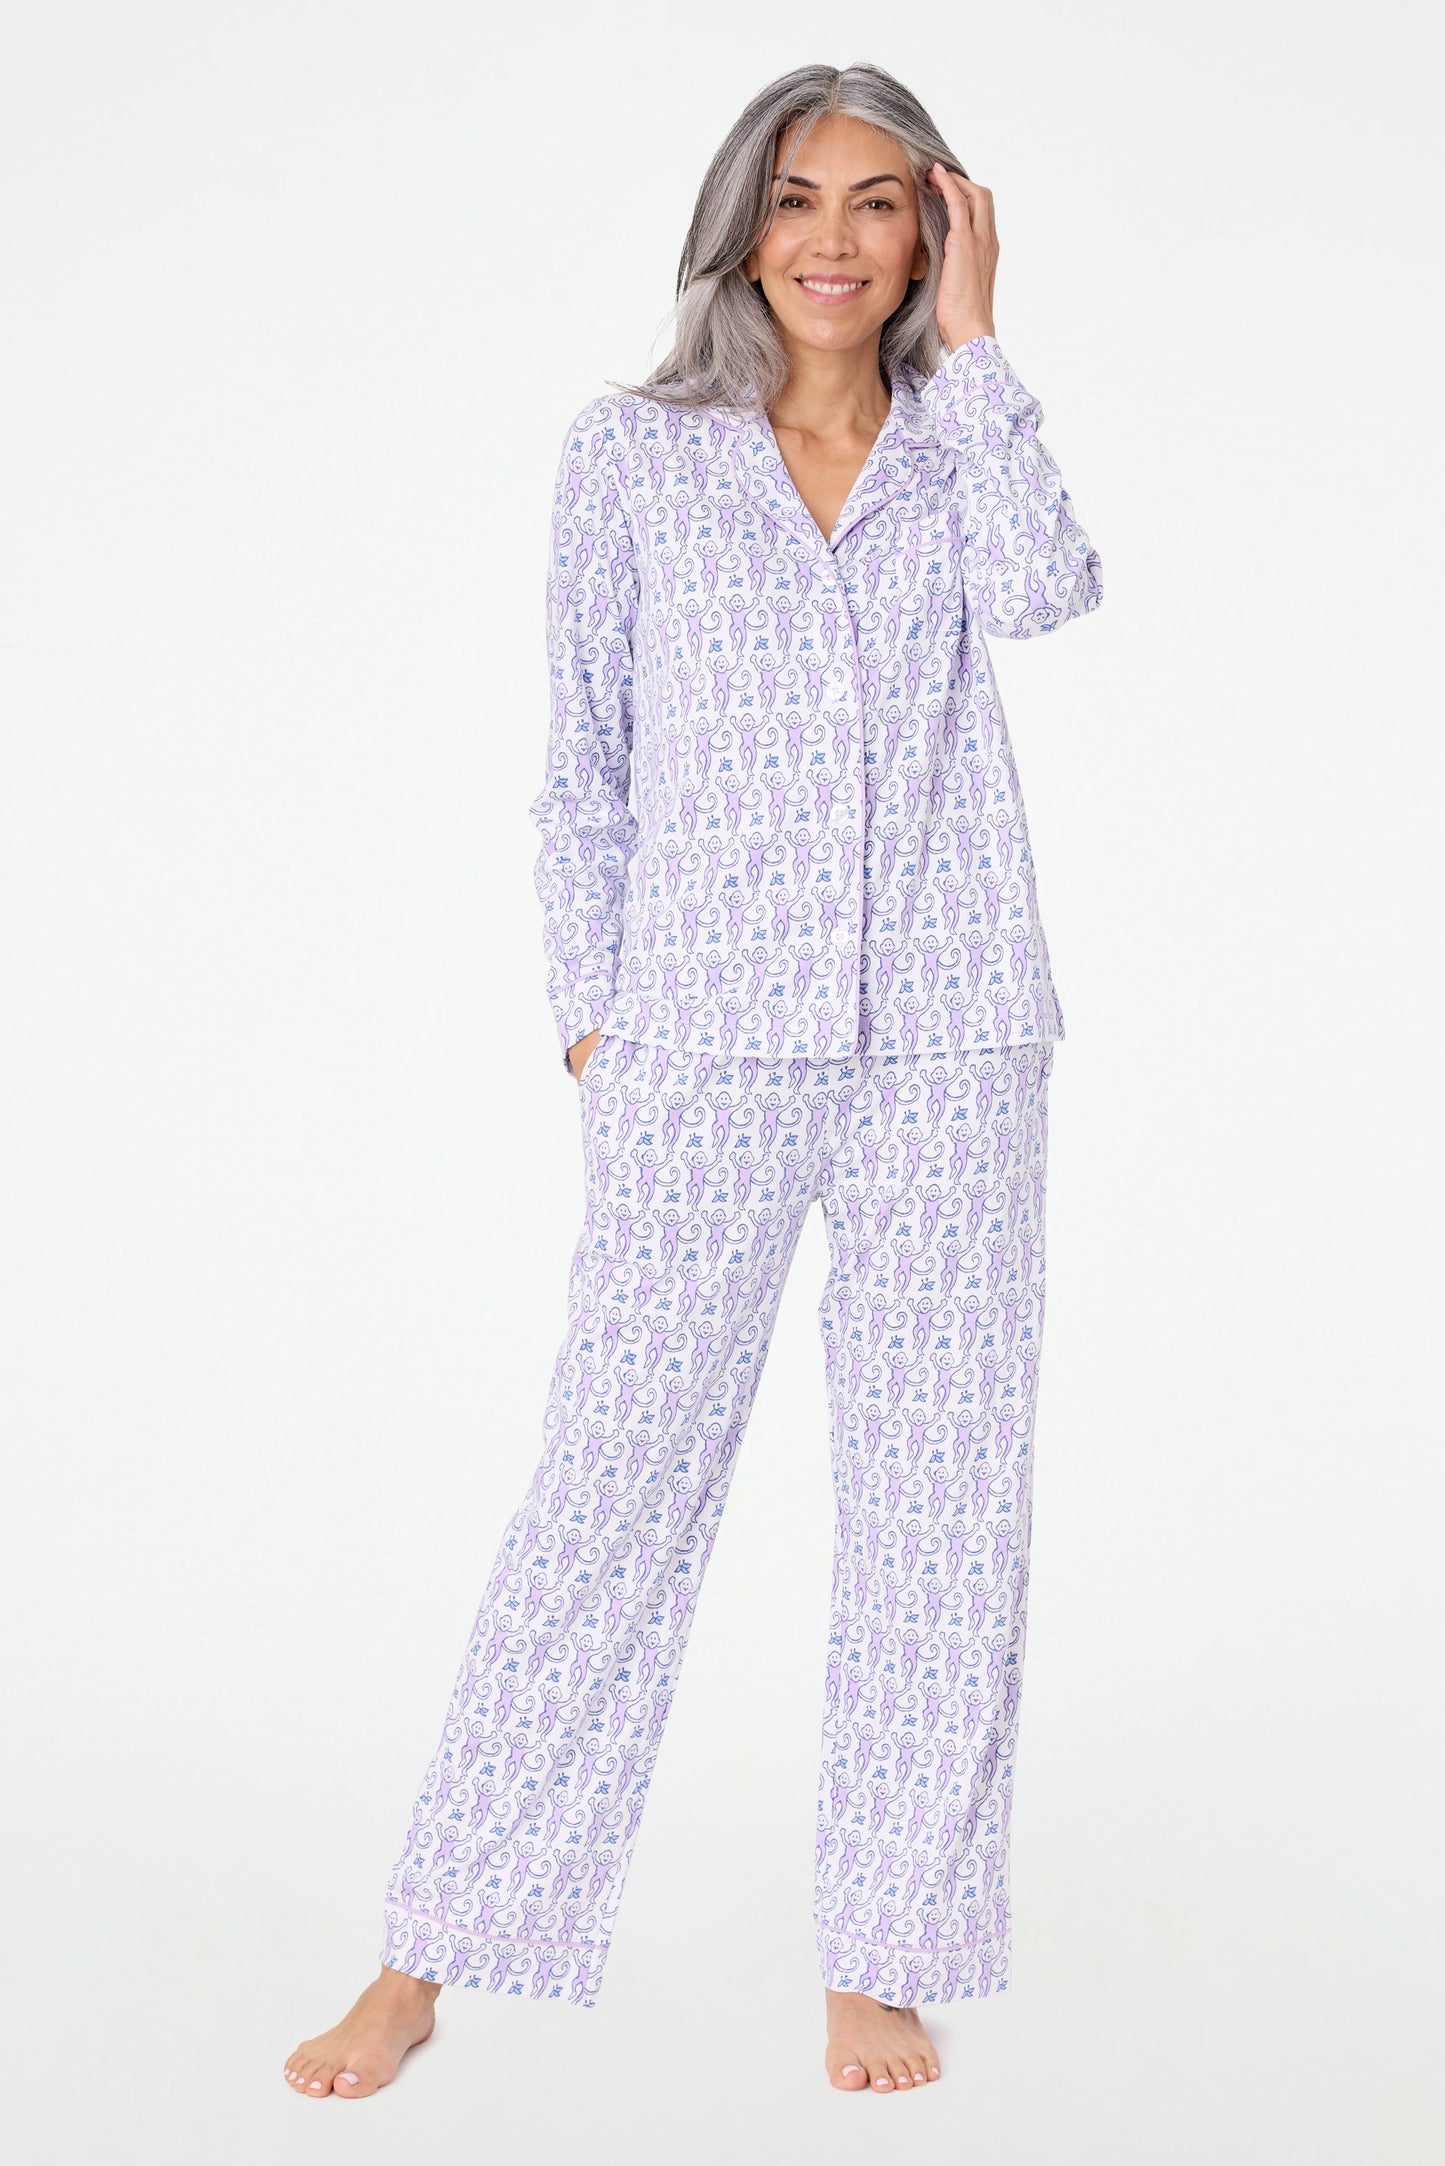 Roller Rabbit Lavender Monkey Long Sleeve Polo Pajamas